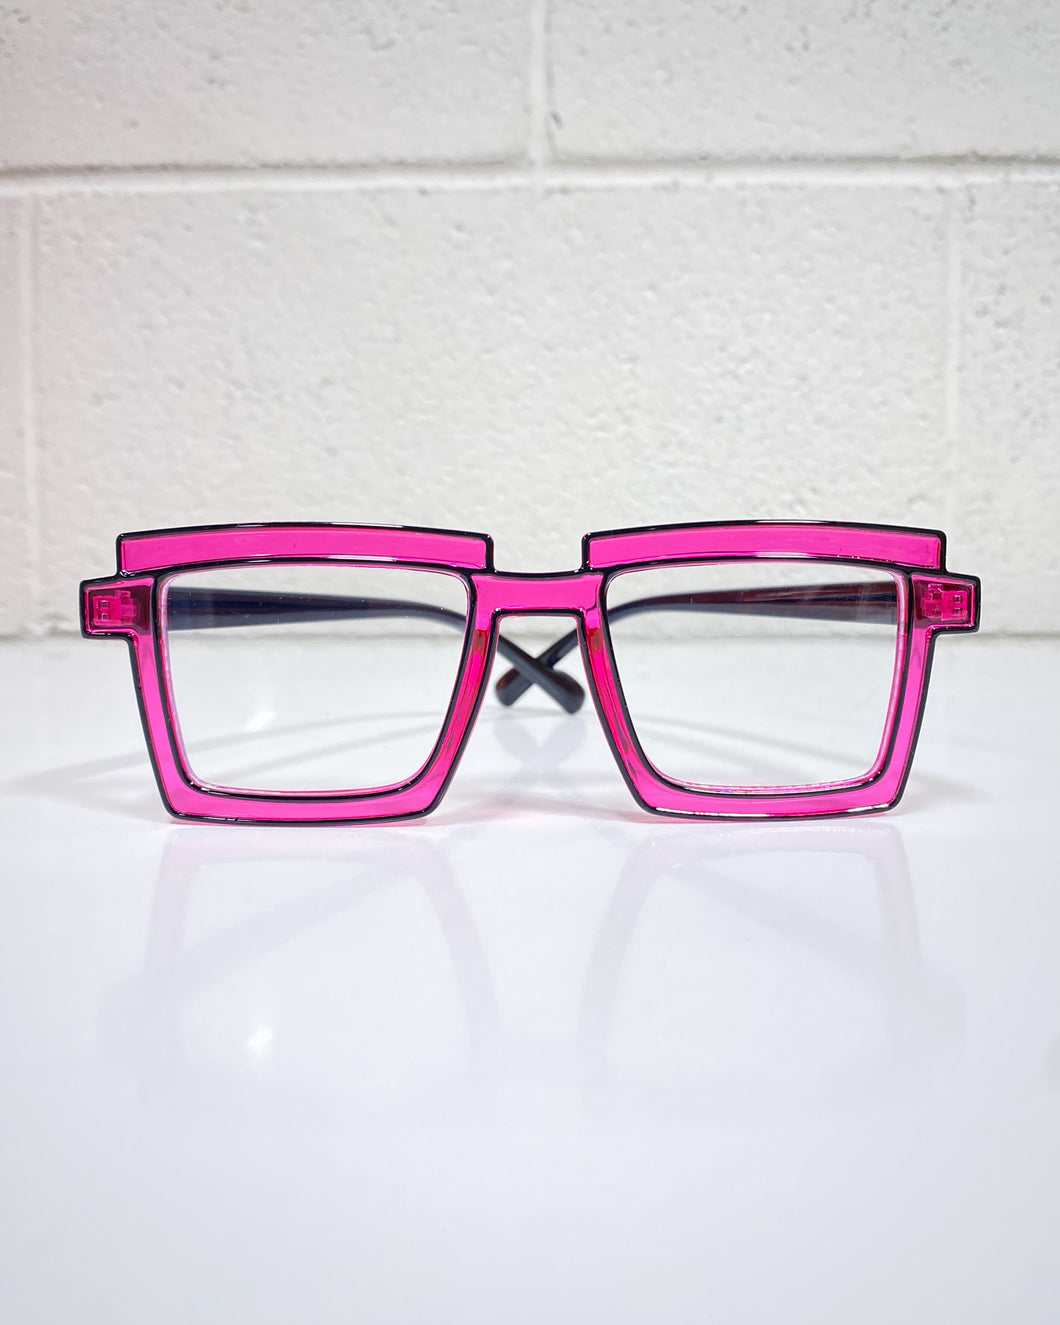 Hot Pink Glasses